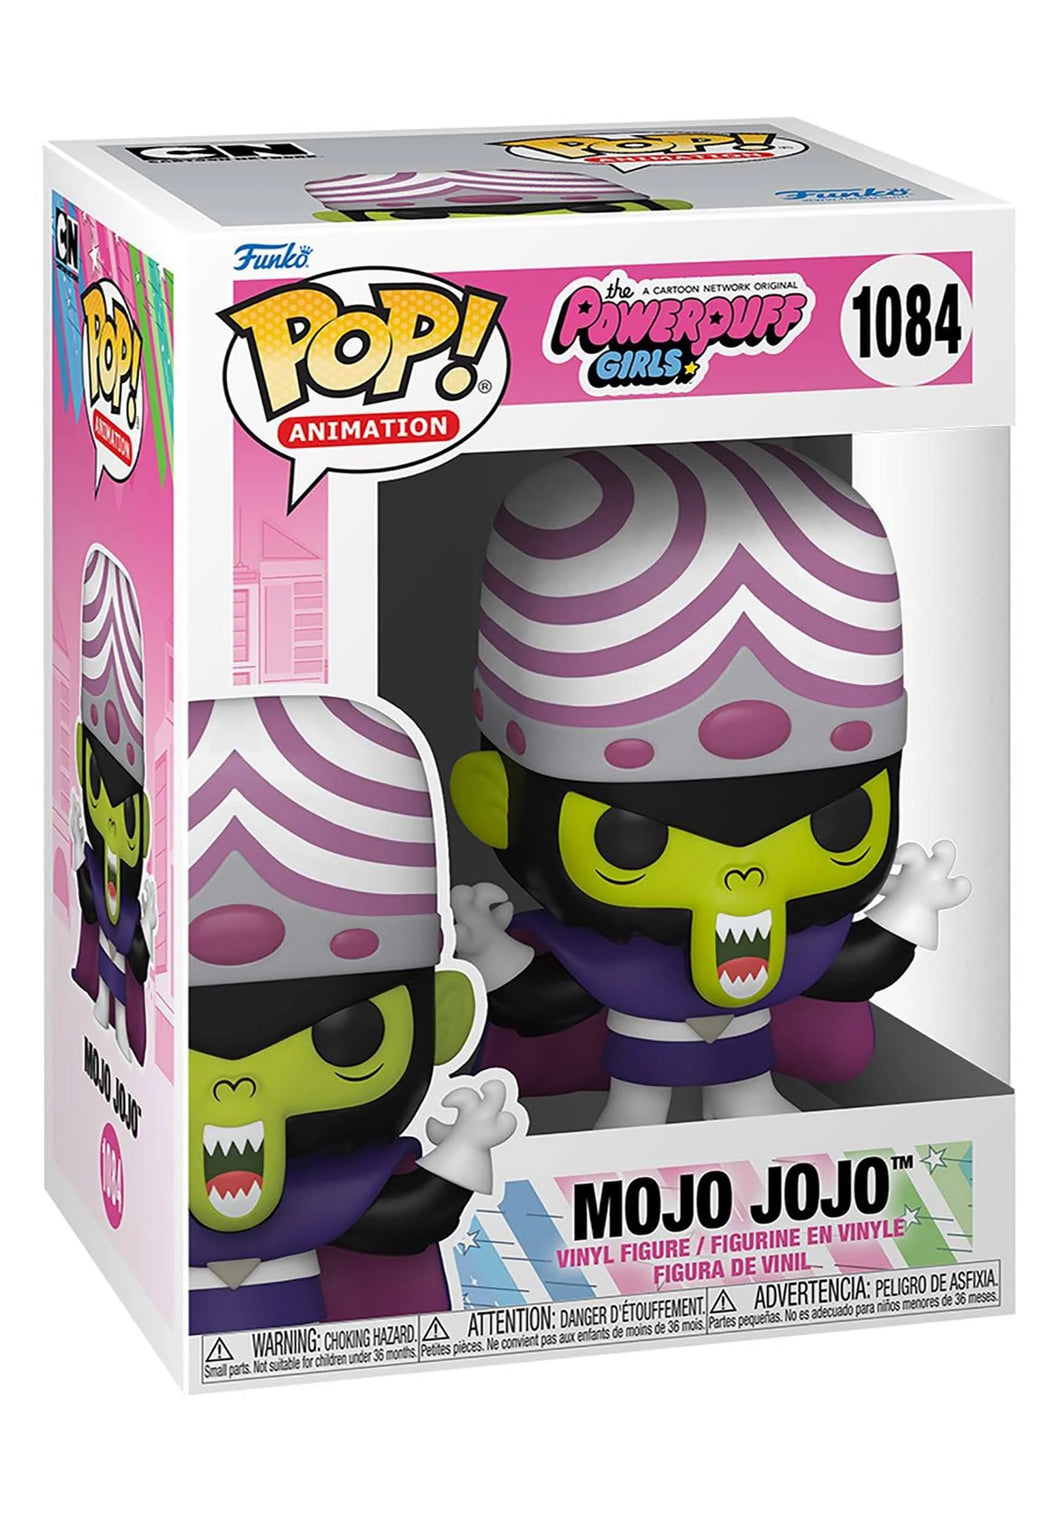 Funko Pop! Powerpuff Girls Mojo Jojo